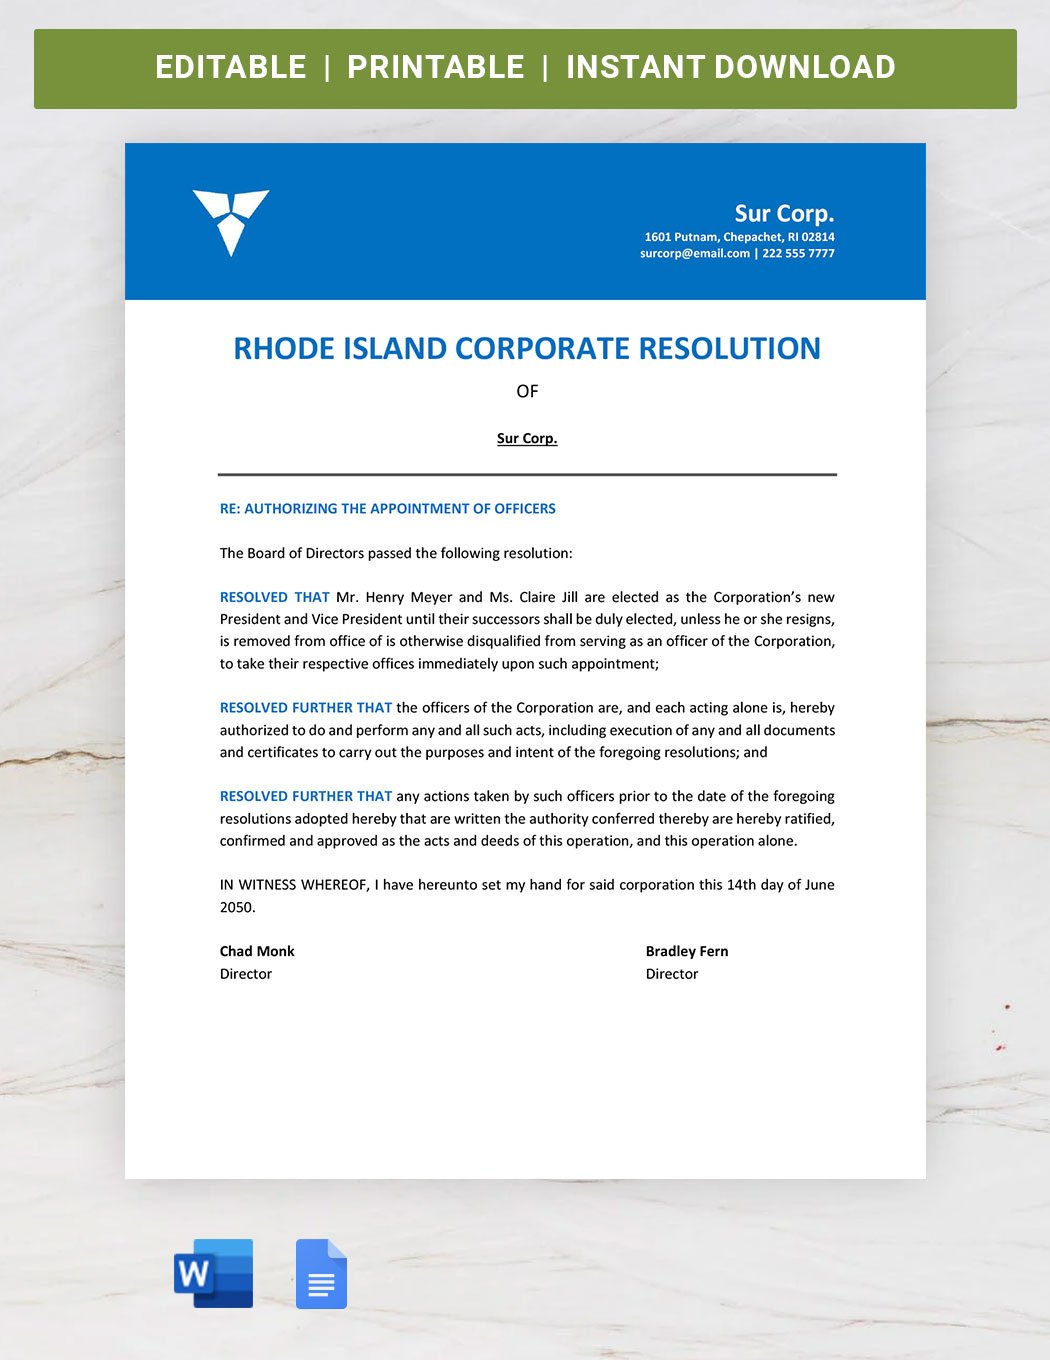 Rhode Island Corporate Resolution Template in Word, Google Docs